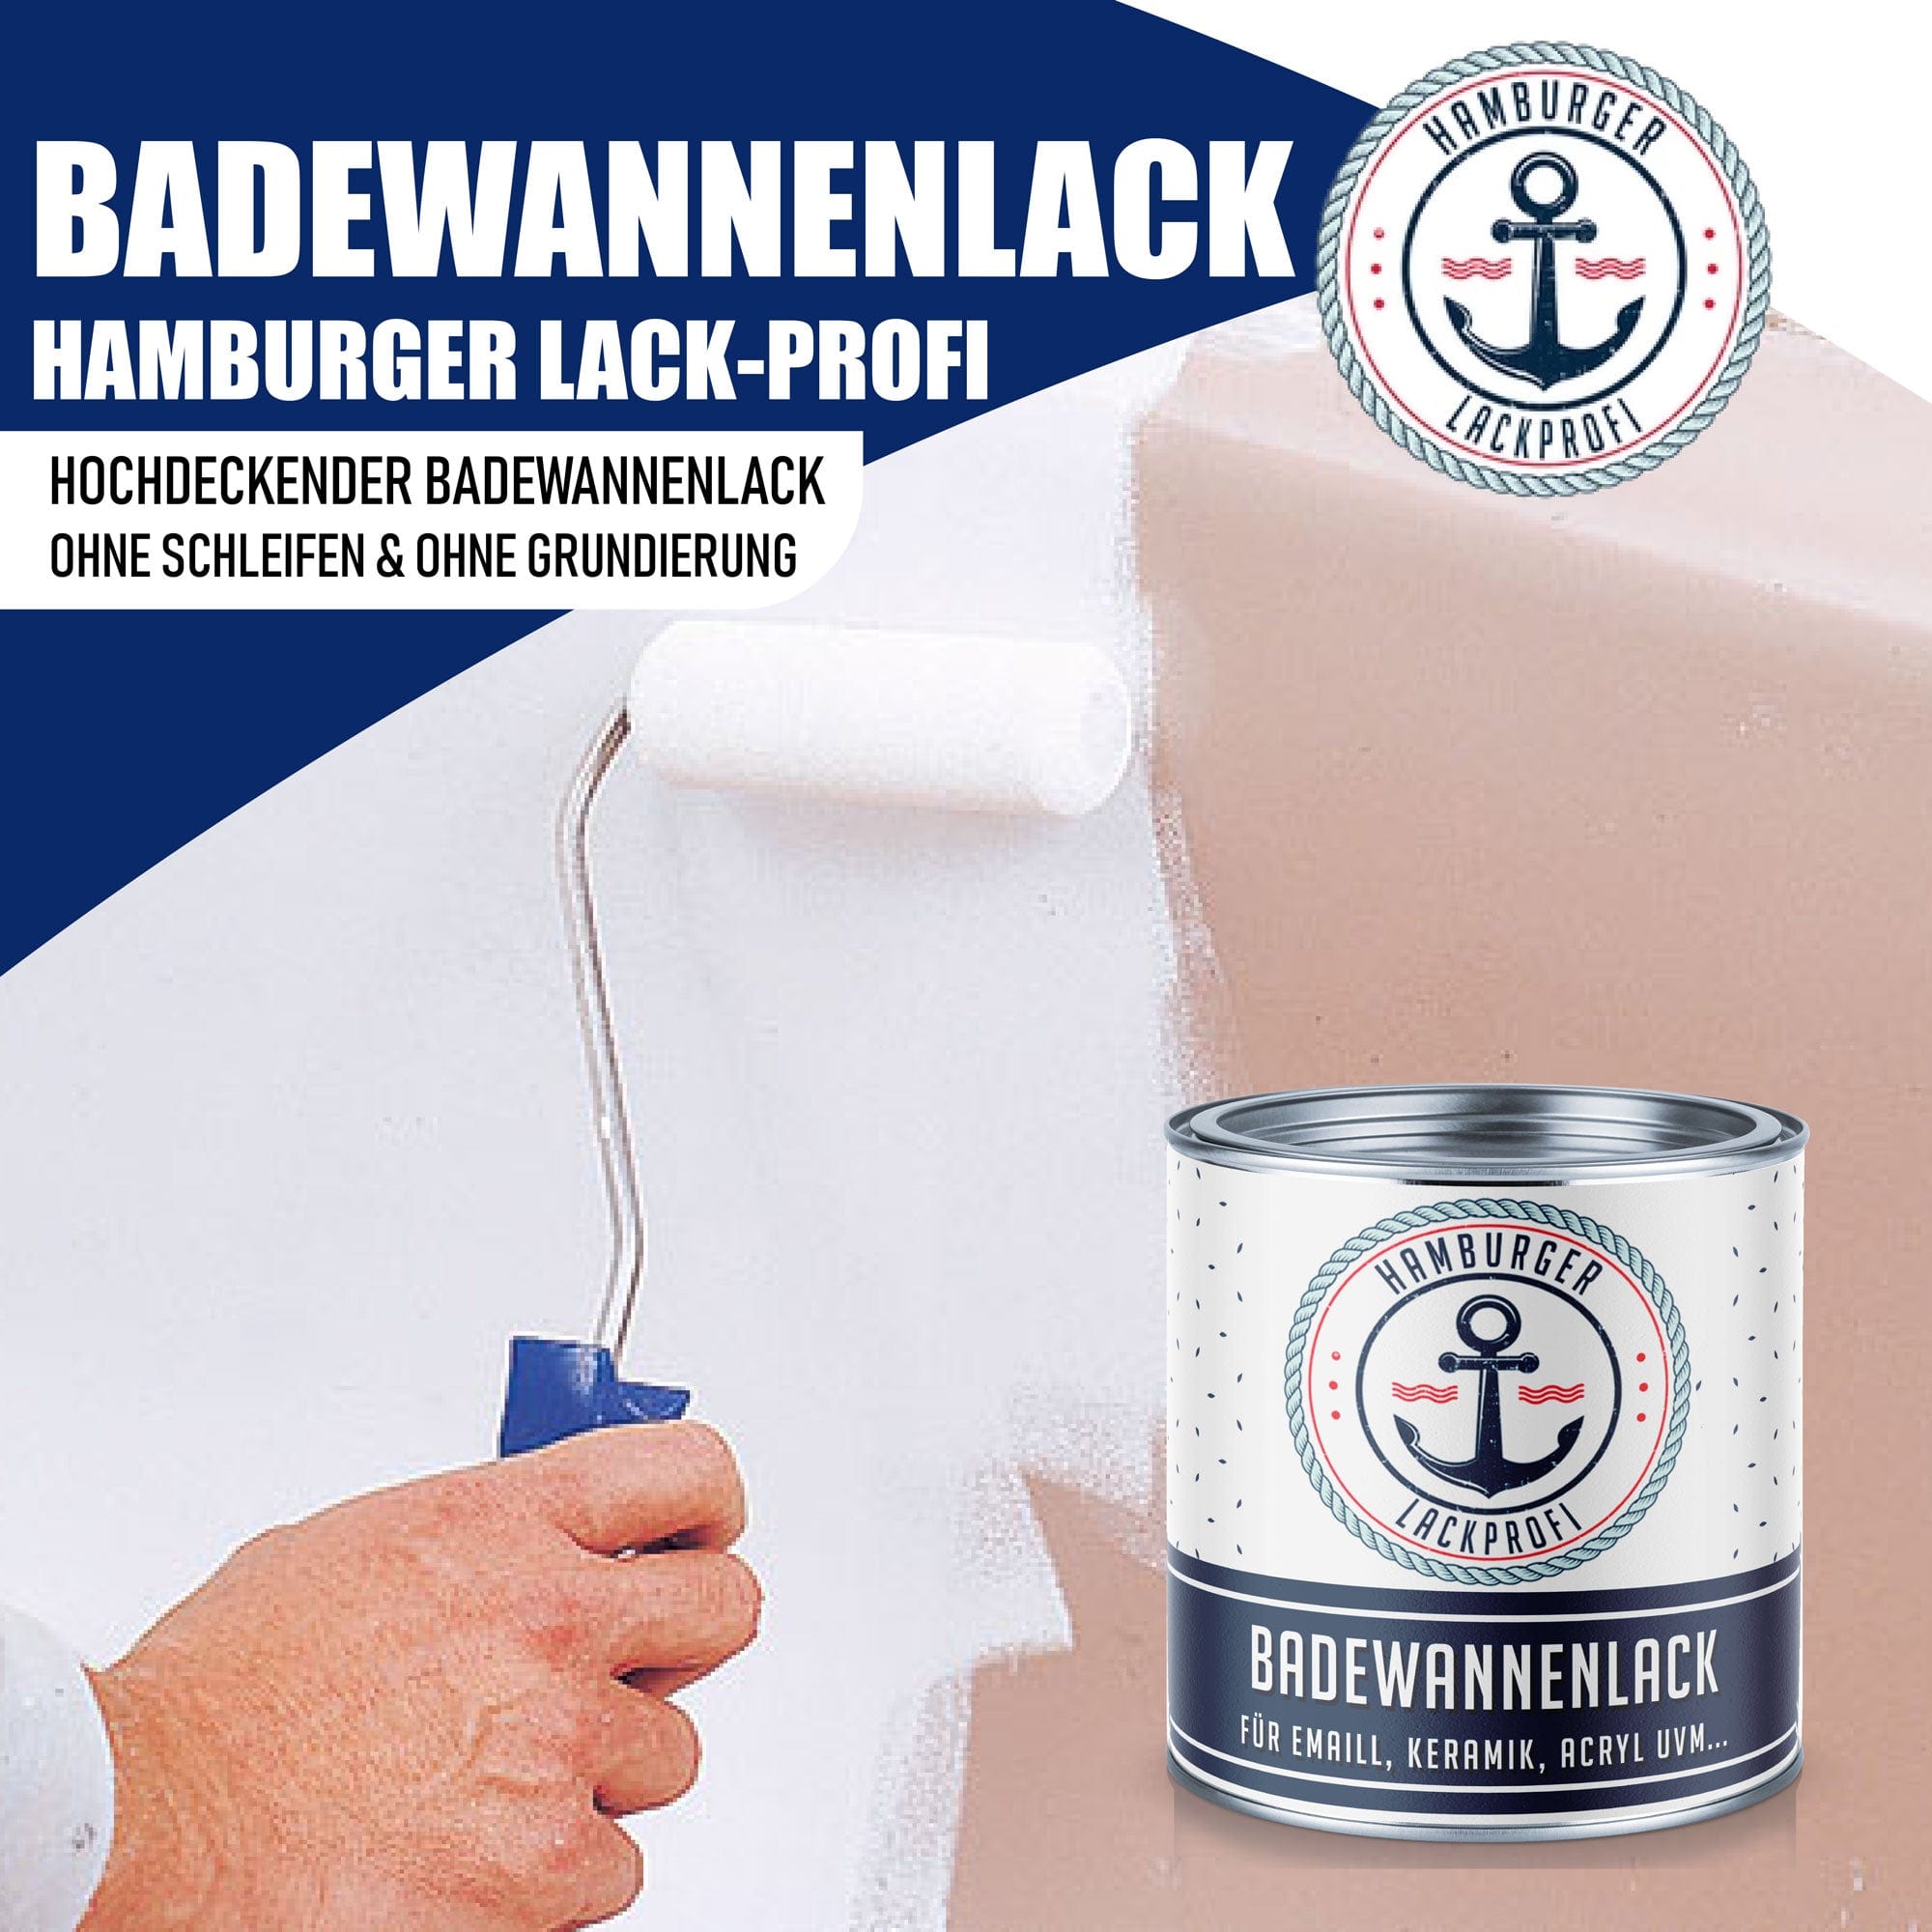 Hamburger Lack-Profi Badewannenlack Hamburger Lack-Profi 2K Badewannenlack Brillantblau RAL 5007 - Glänzend / Seidenmatt / Matt